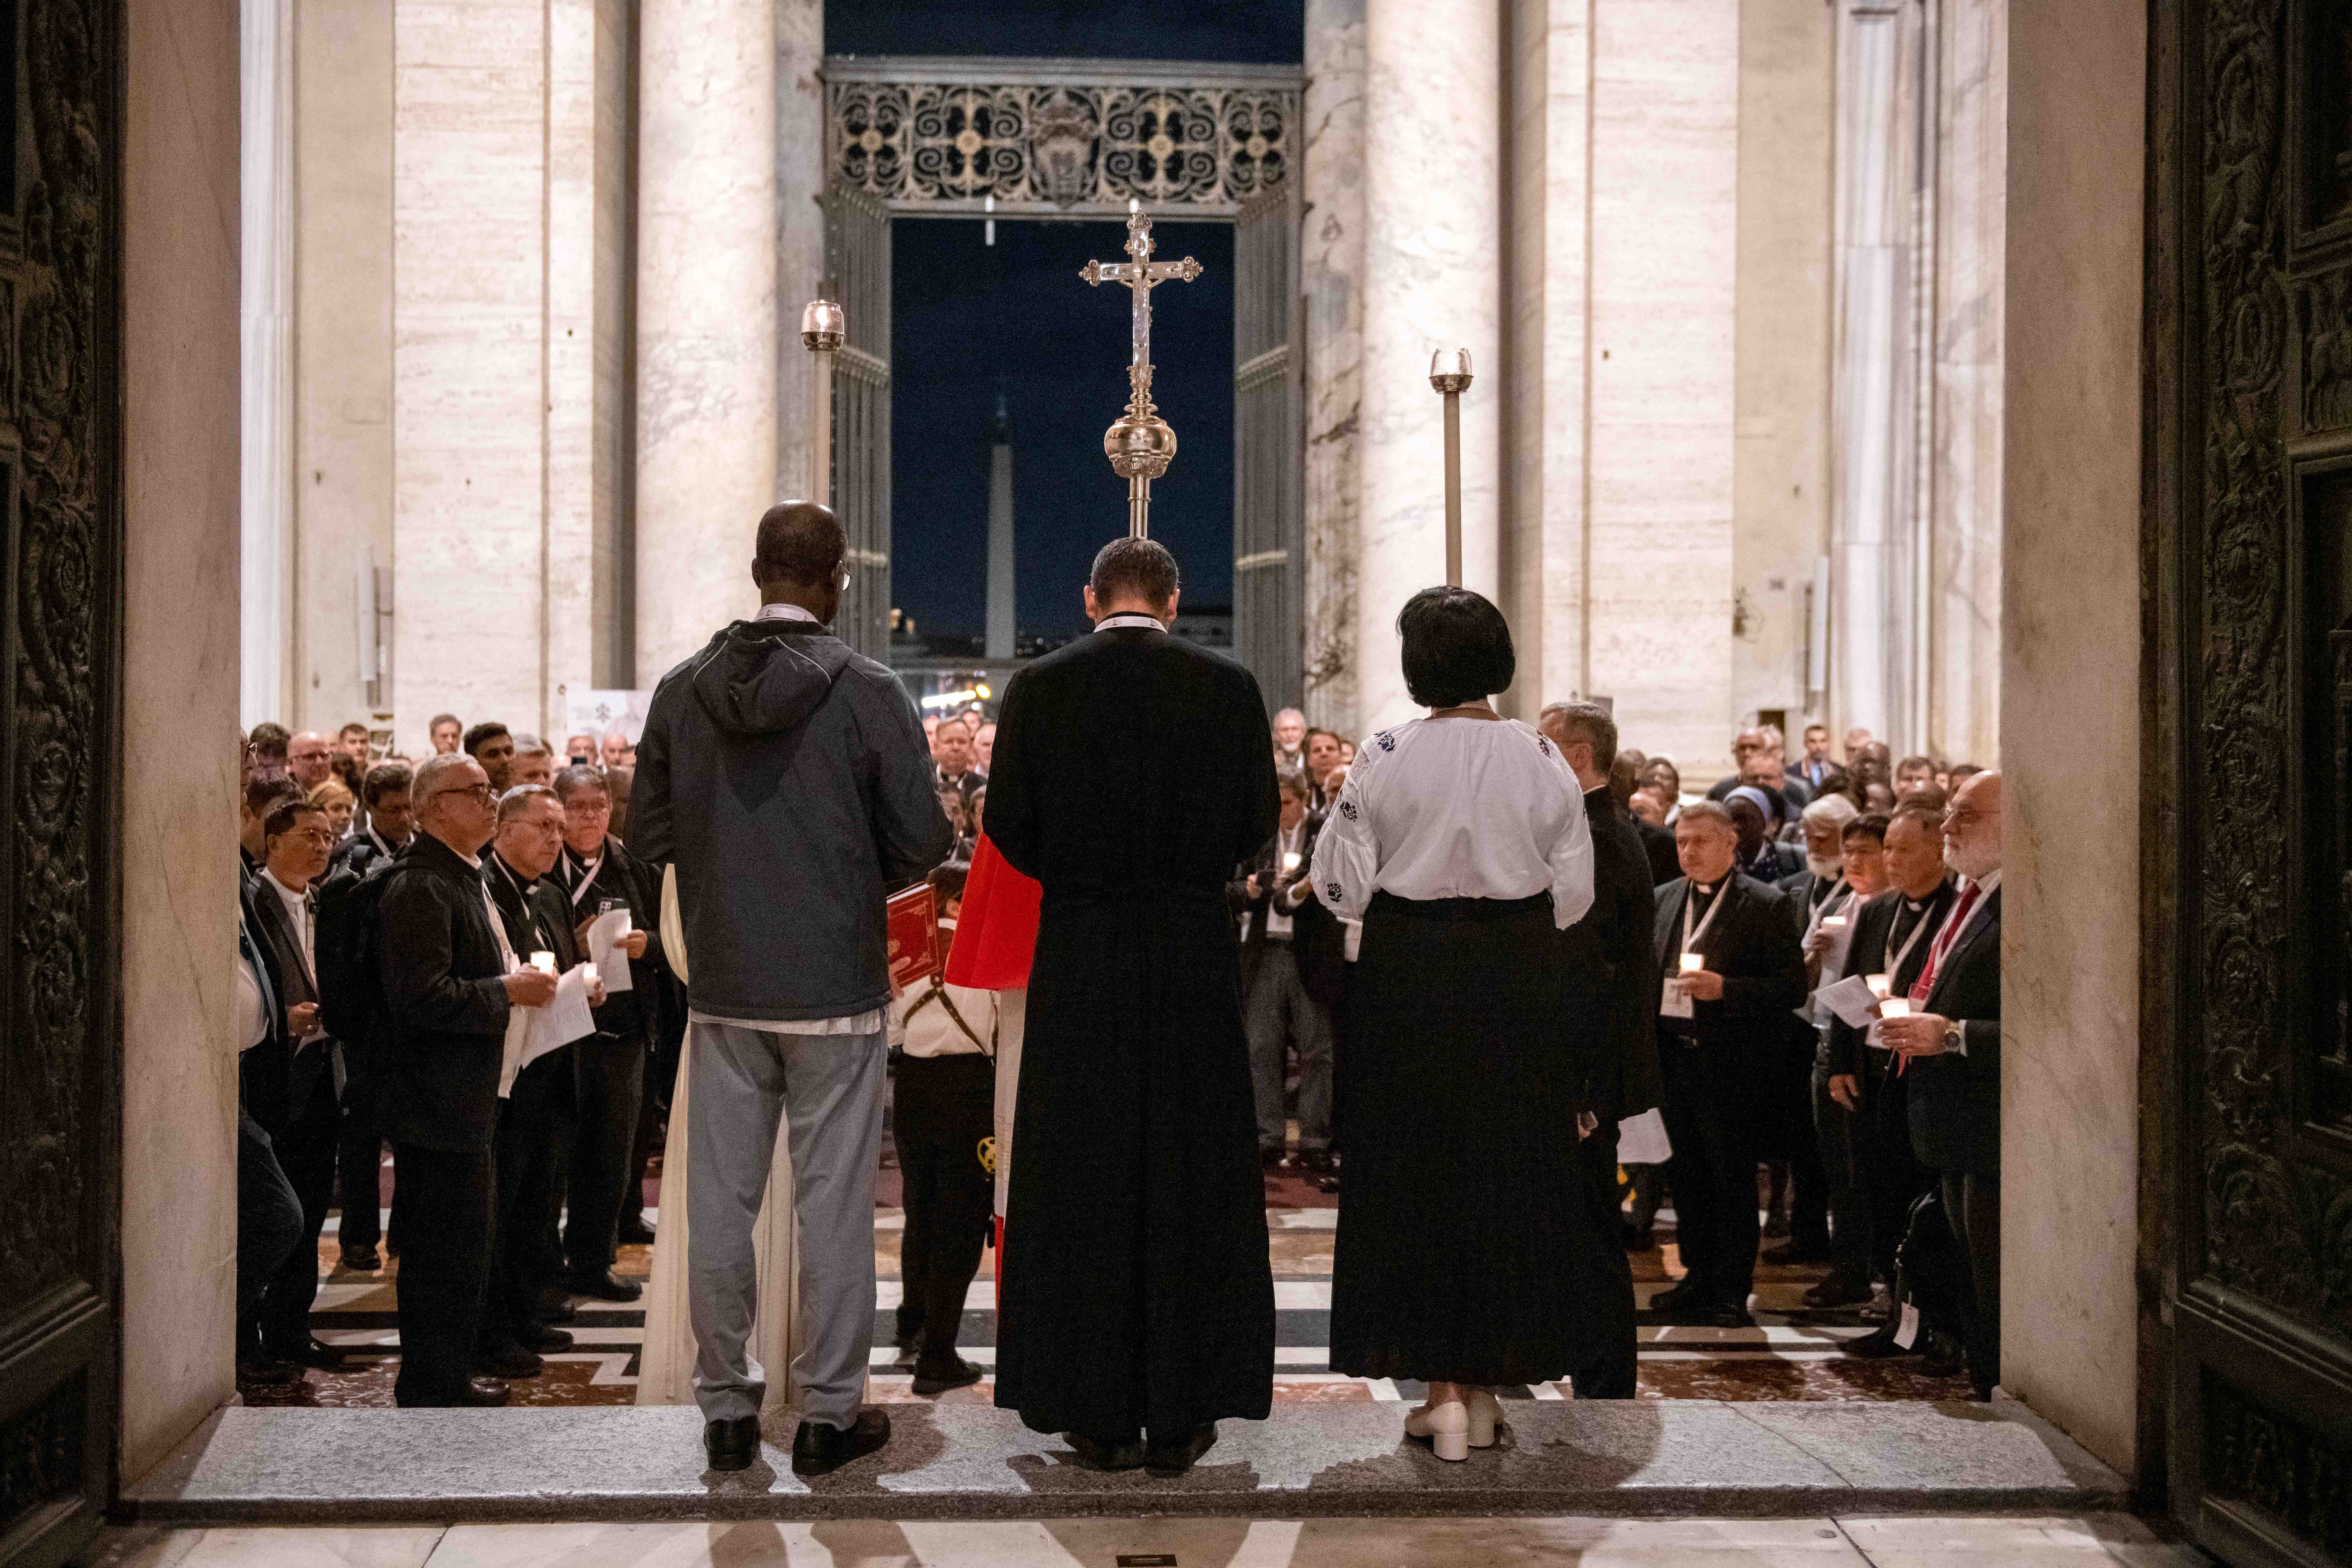 Synod members at St. Peter's Basilica